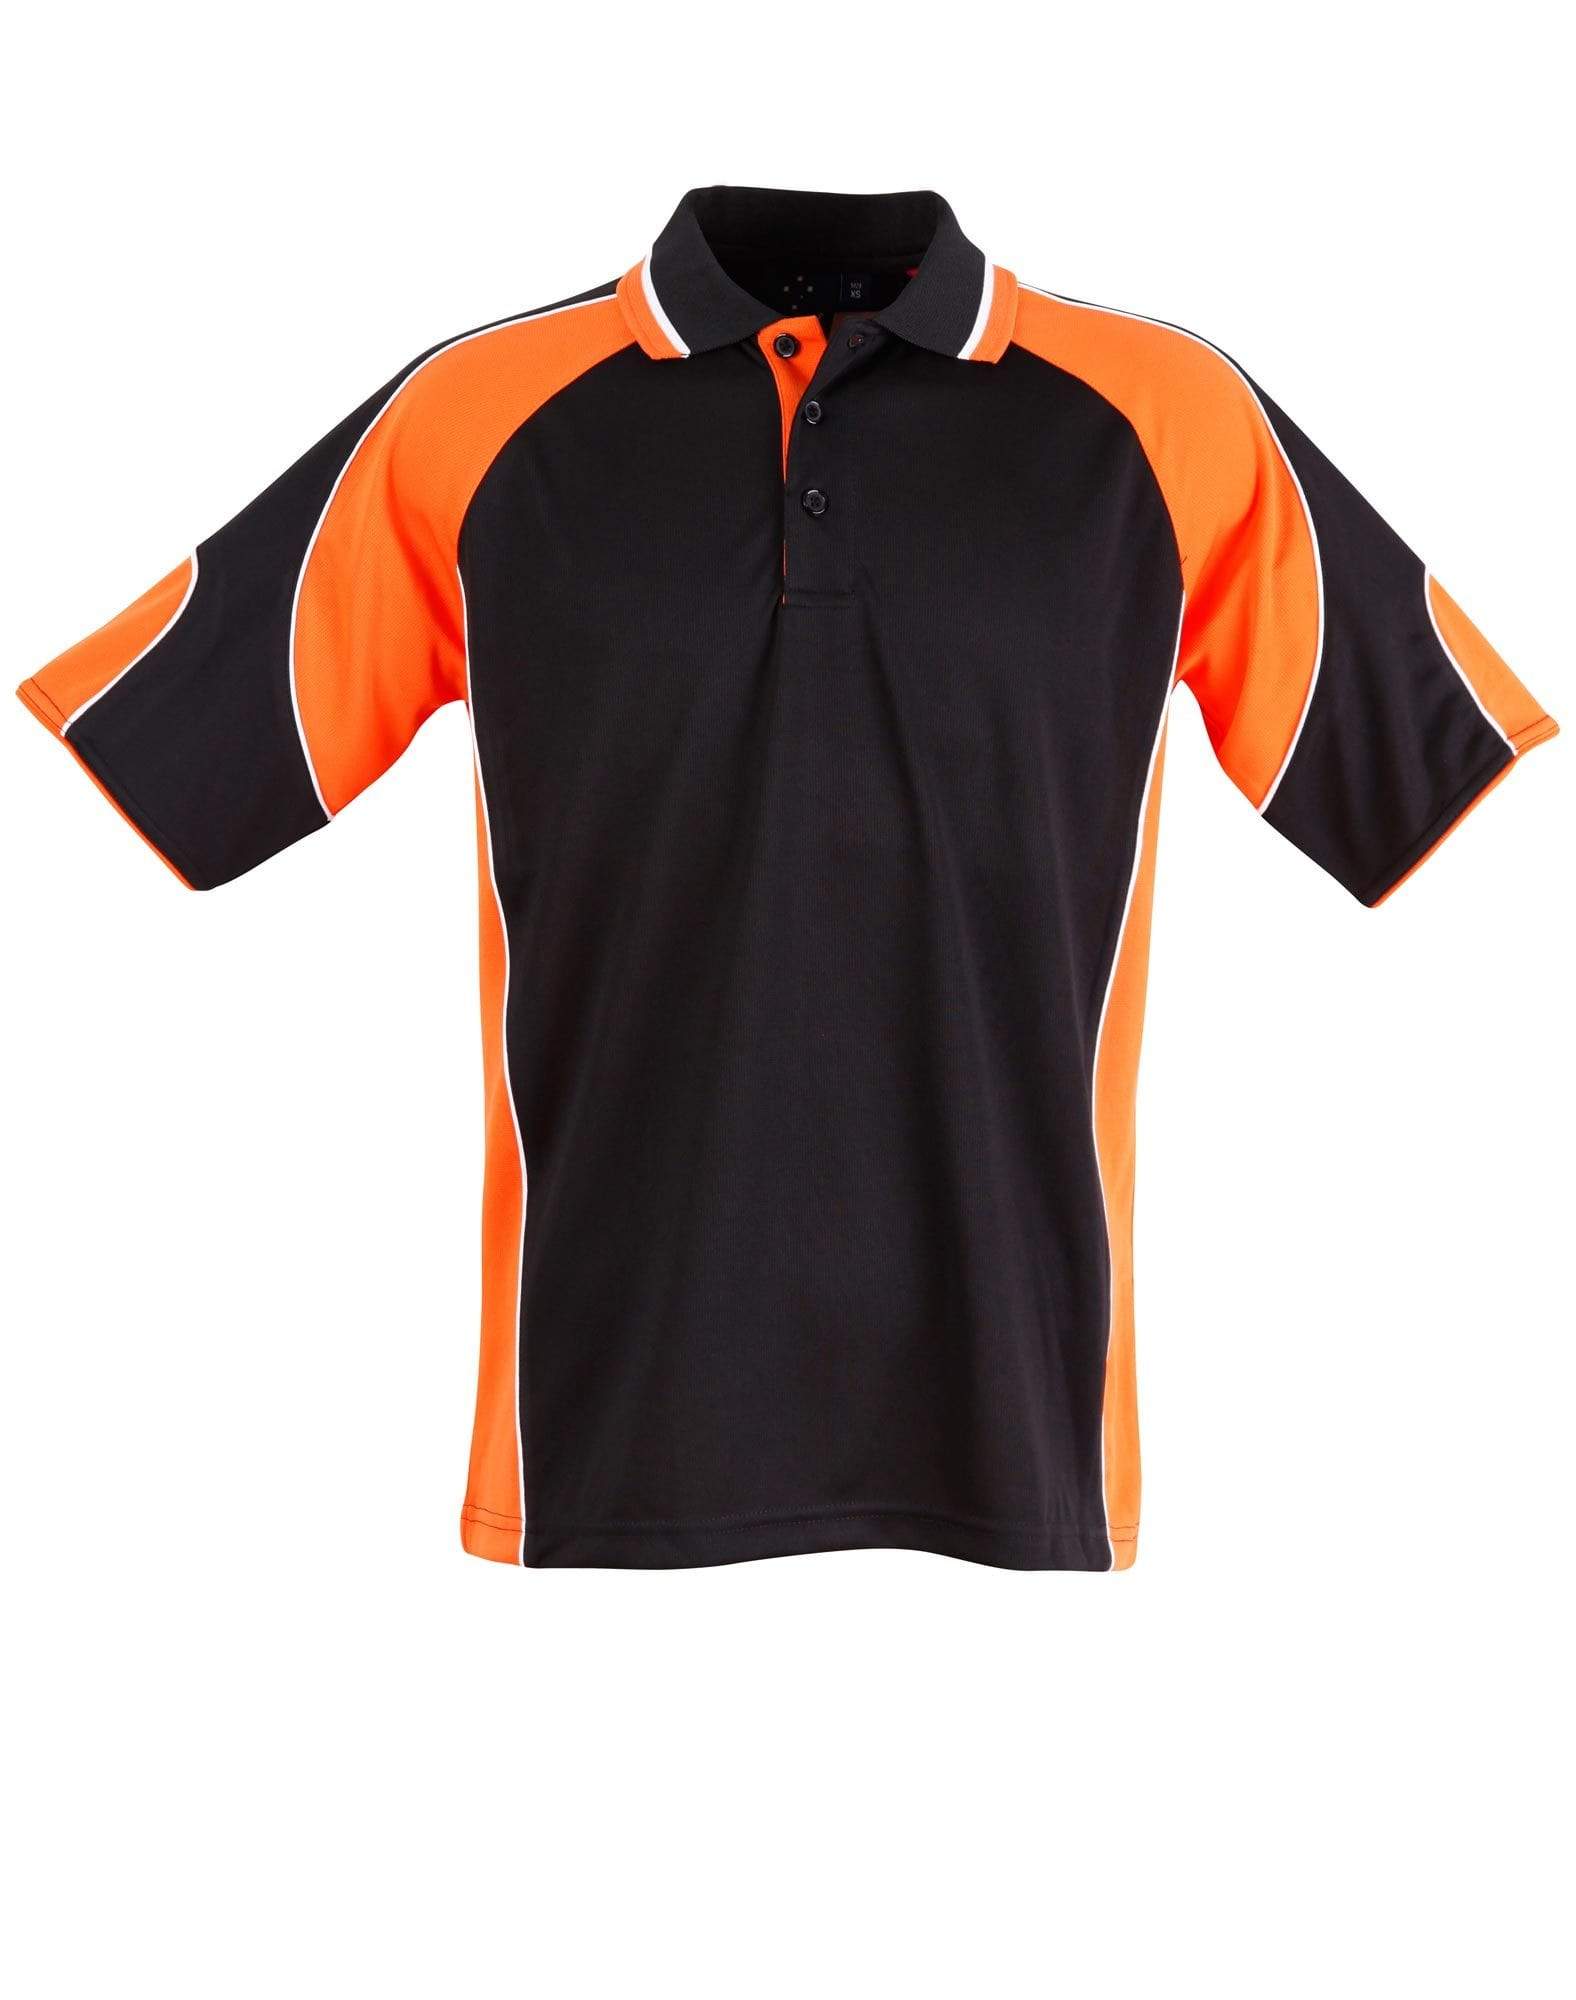 Winning Spirit Casual Wear Black/Orange / 6K Winning Spirit Alliance Polo Kids Ps61k